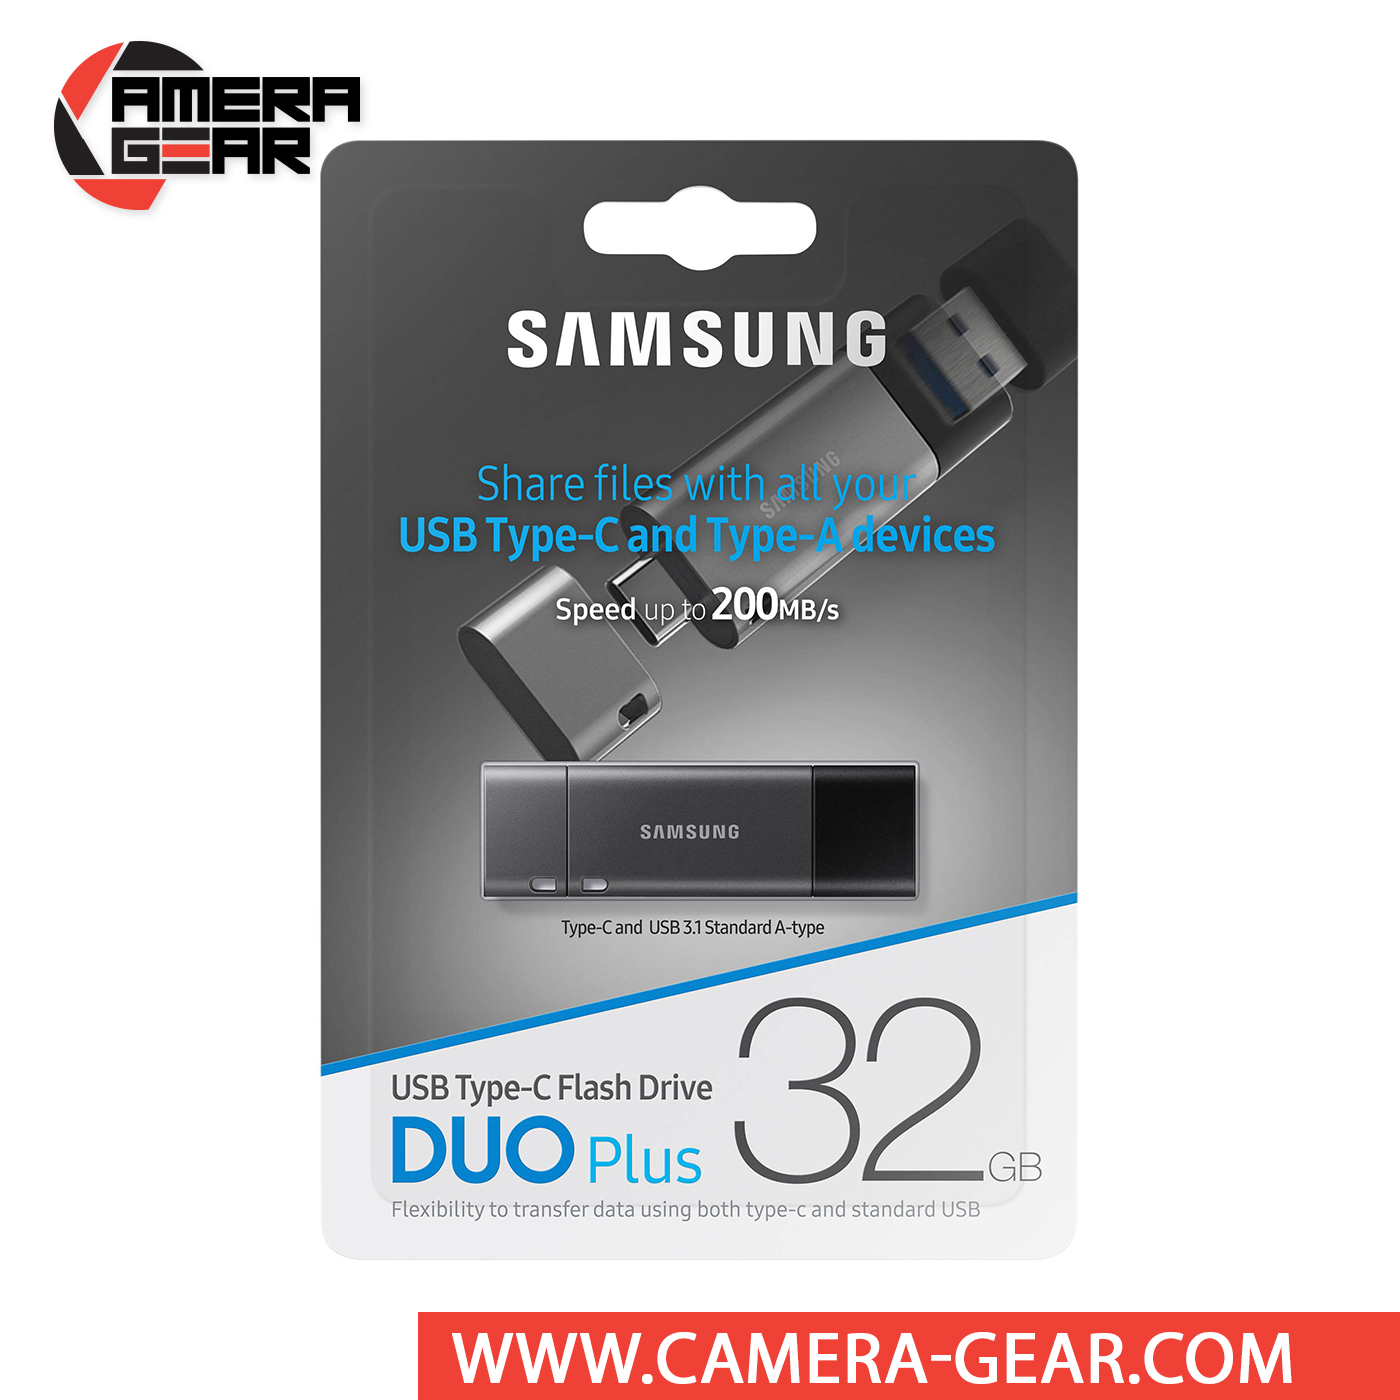 Kirkestol Opgive binde Samsung 32GB DUO Plus USB Type-C Flash Drive - Camera Gear